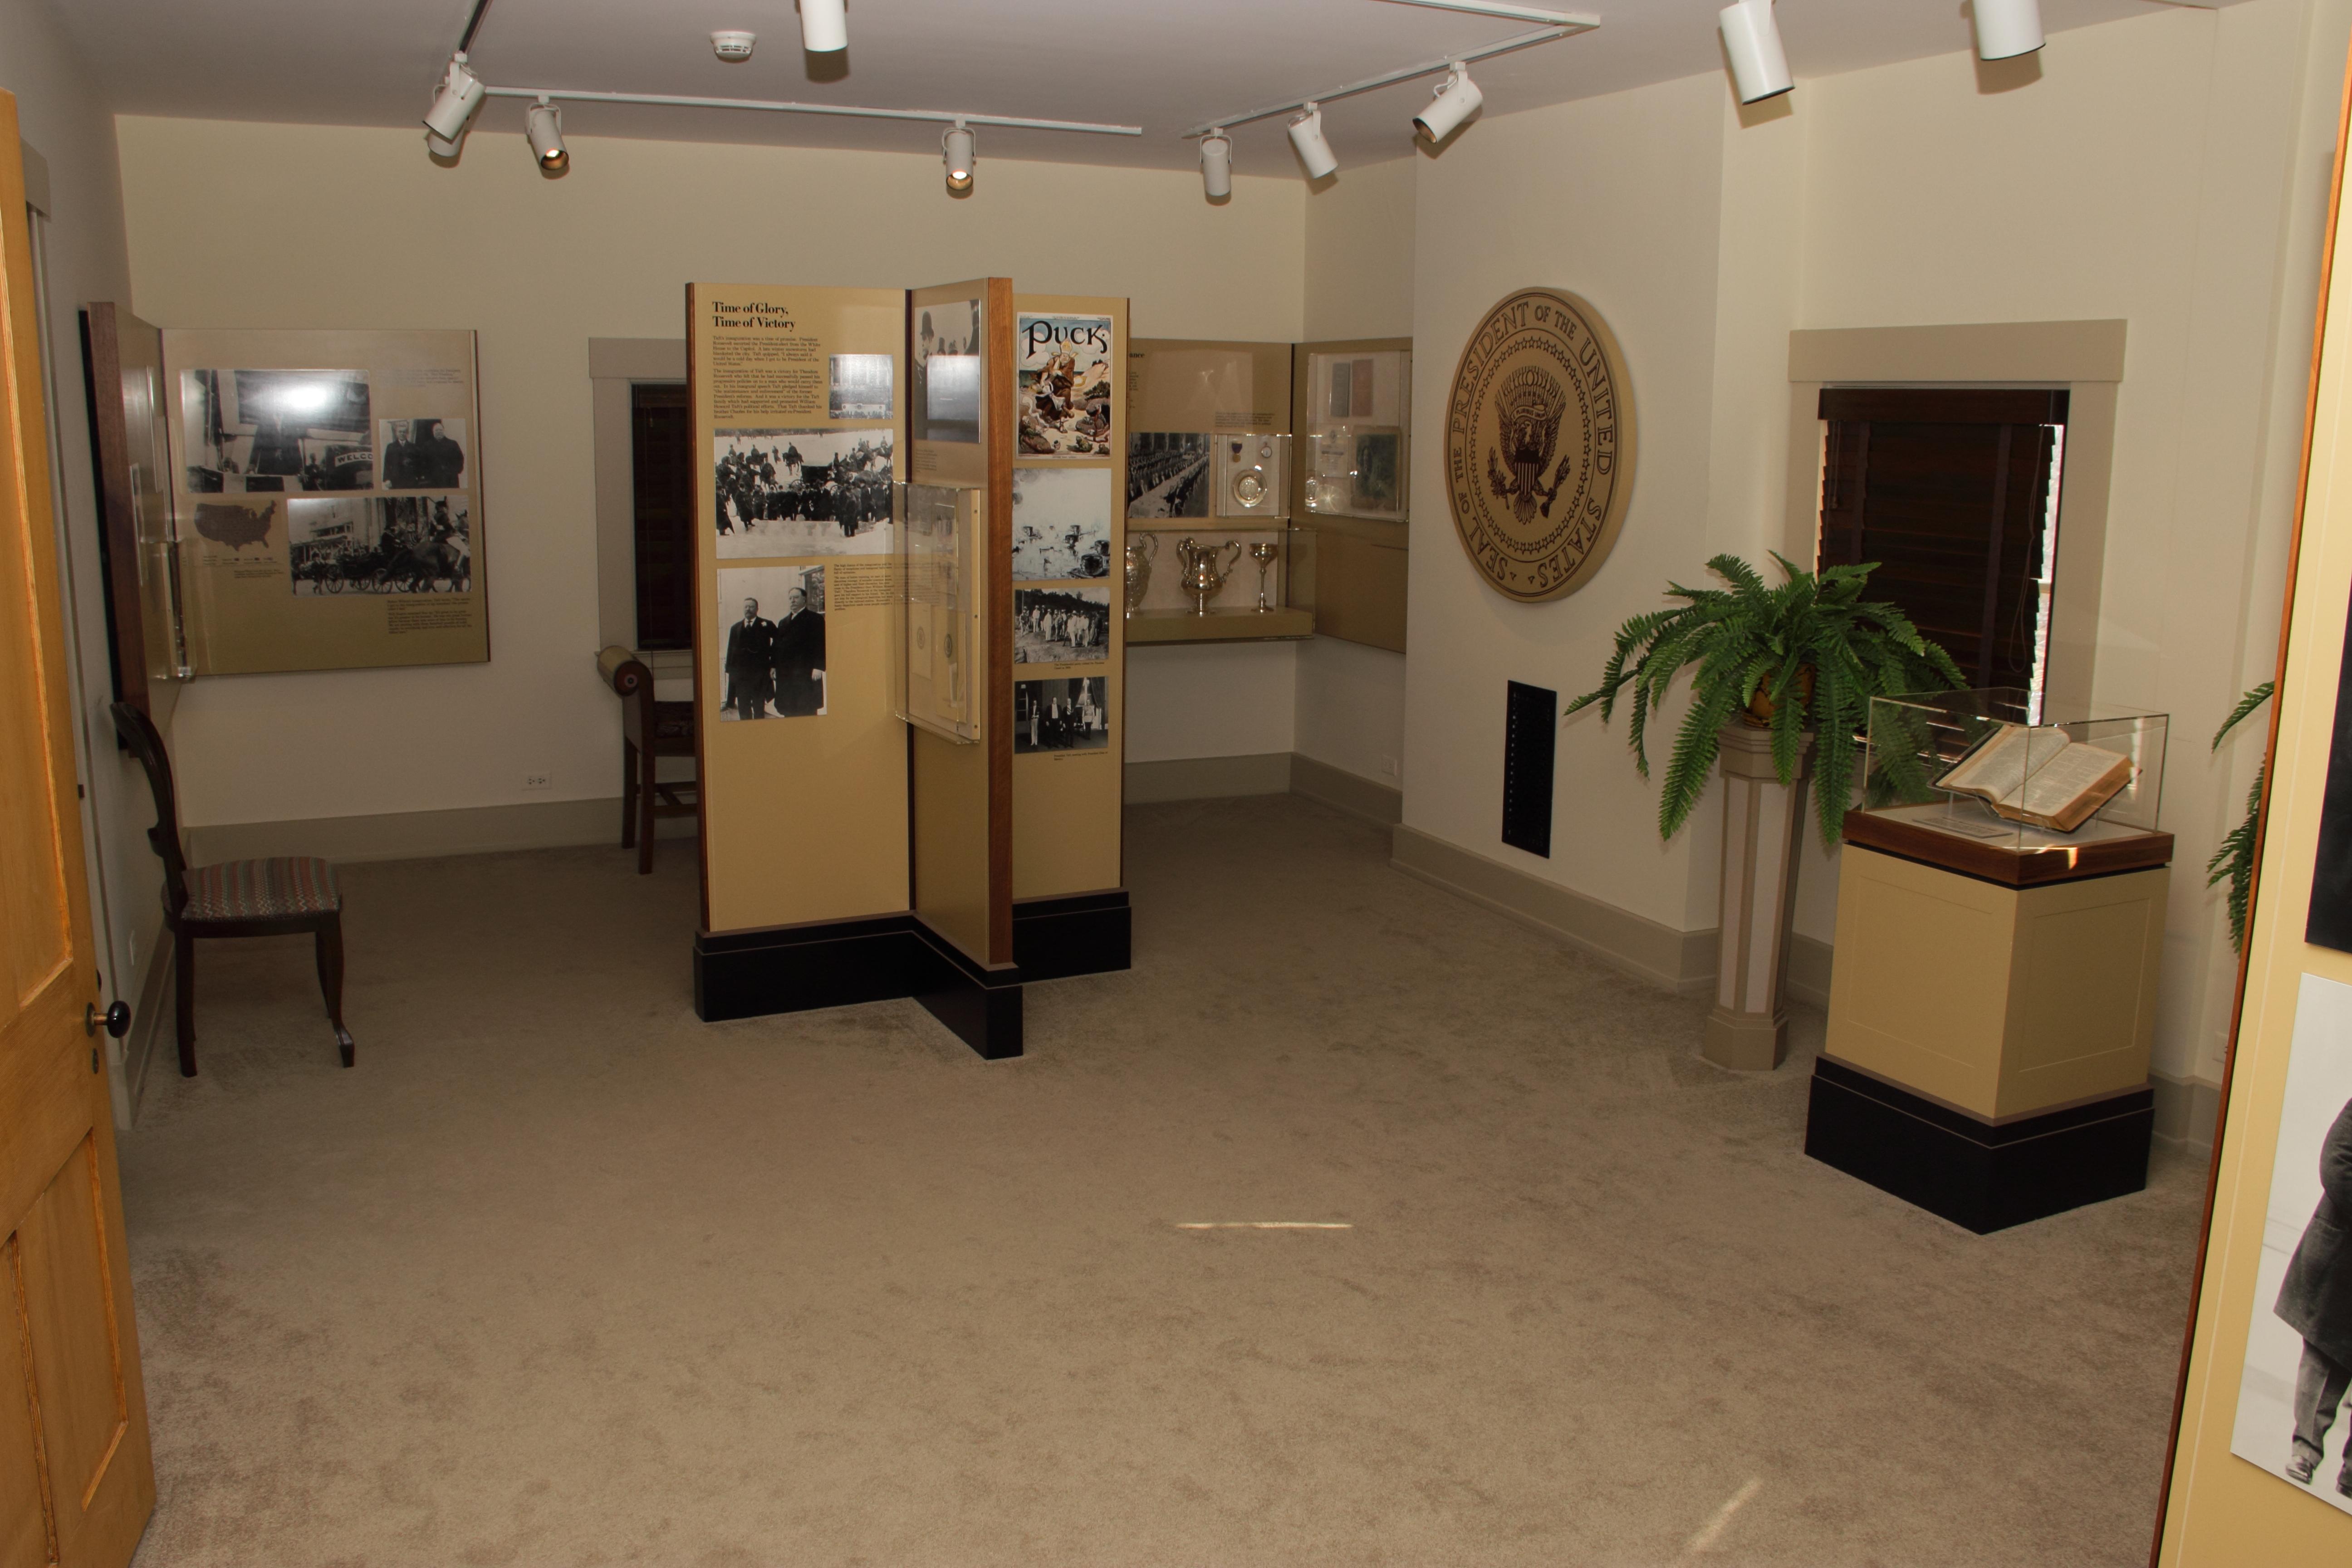 Interpretive Exhibits inside of the Taft home